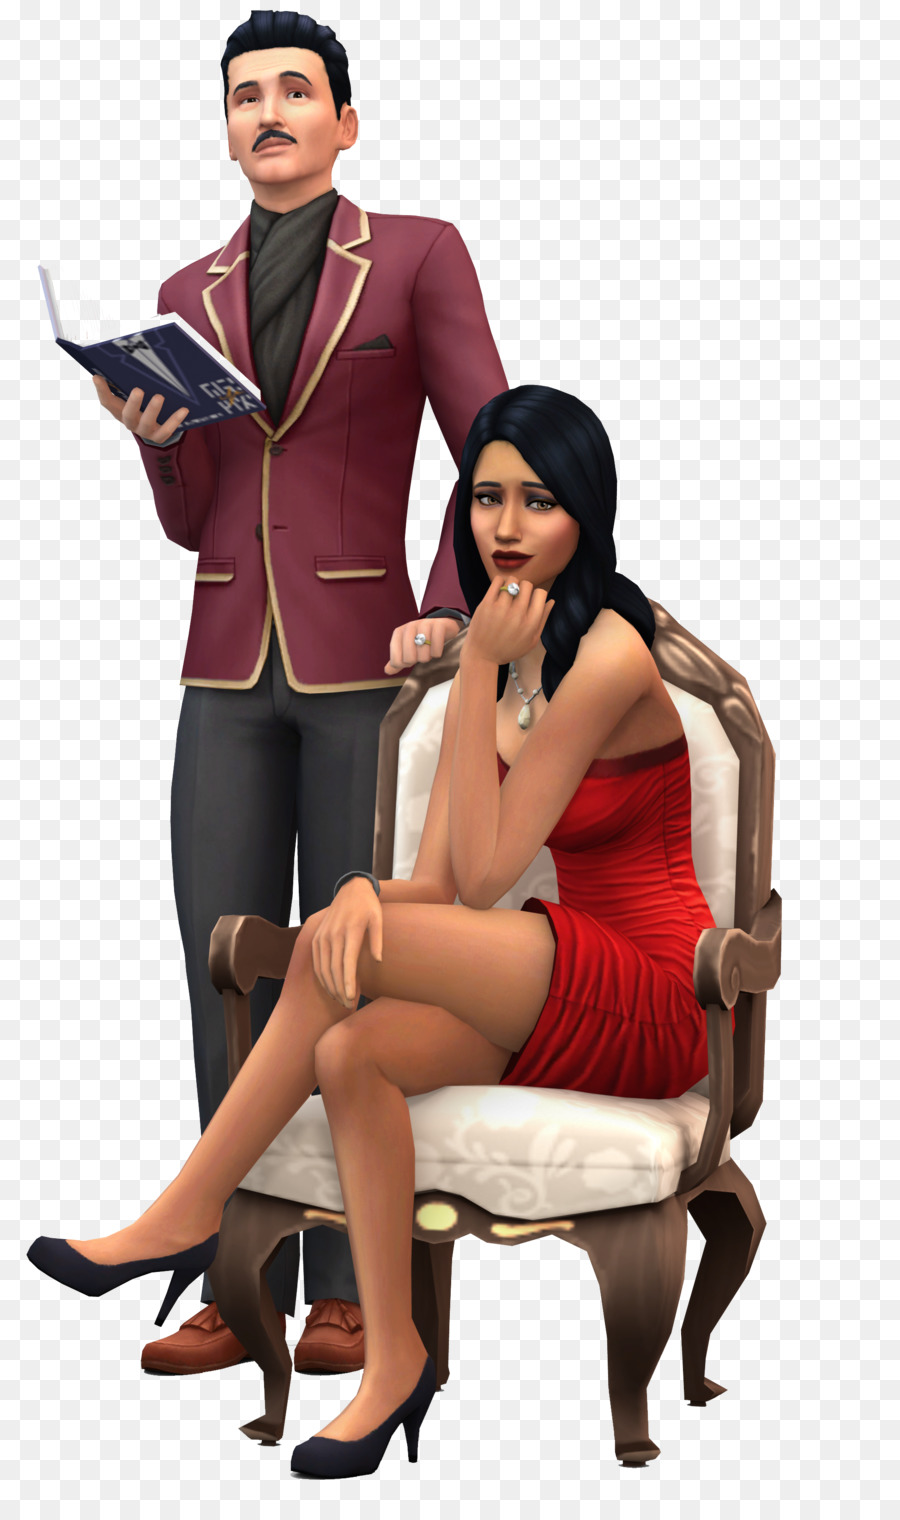 Die Sims 4 Die Sims 2-Die Sims 3-Die Urbz: Sims in the City - Sims